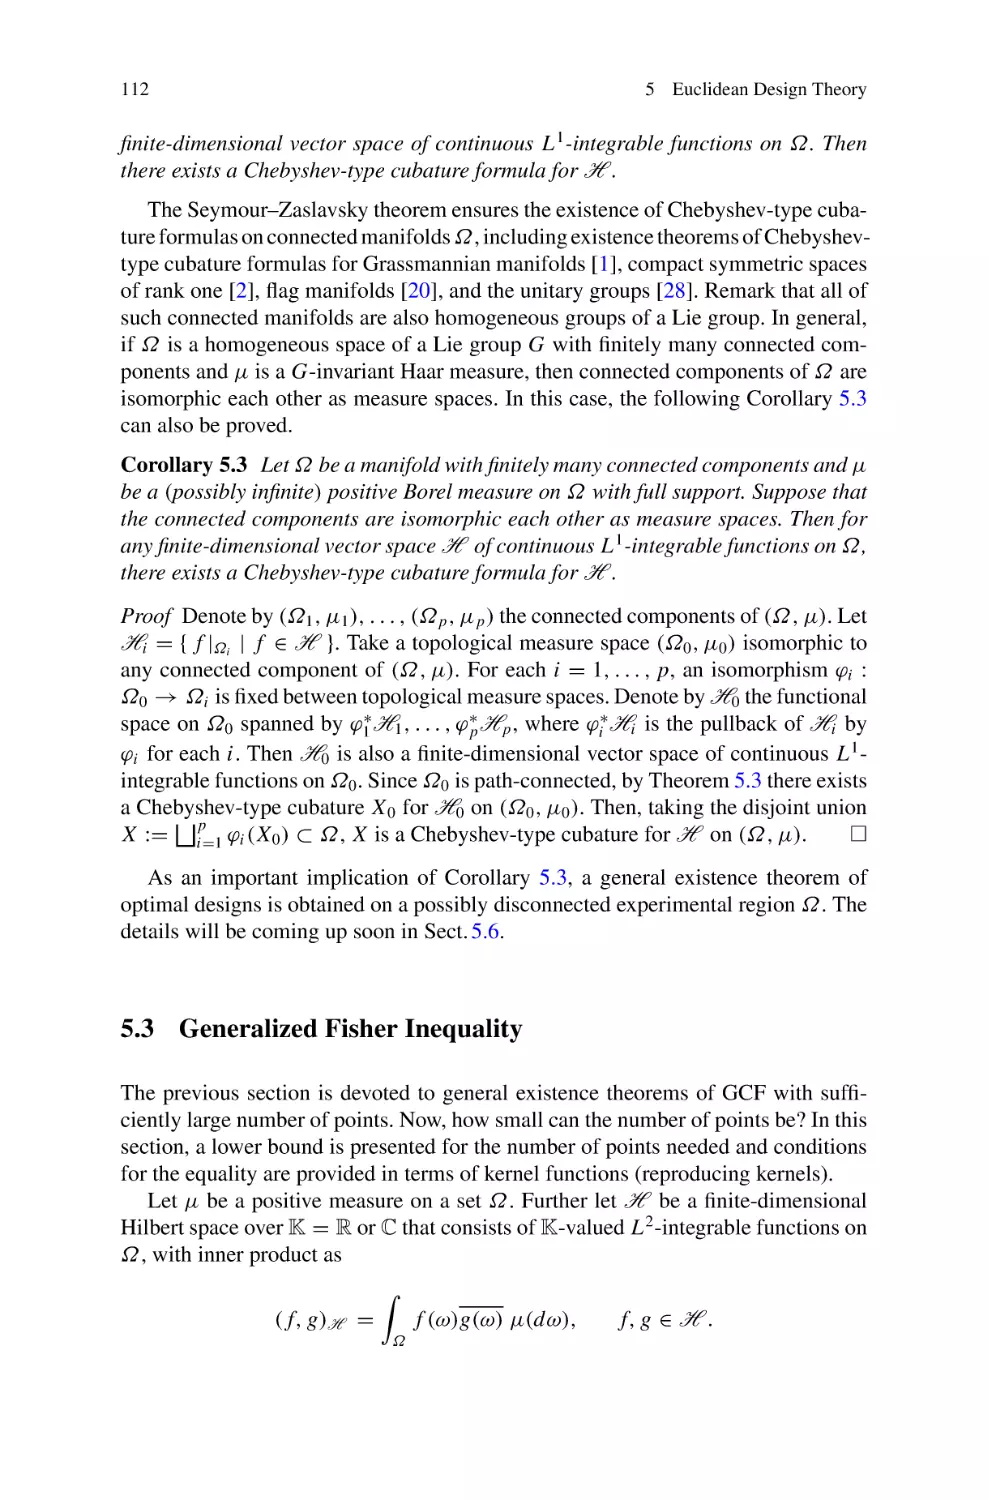 5.3 Generalized Fisher Inequality